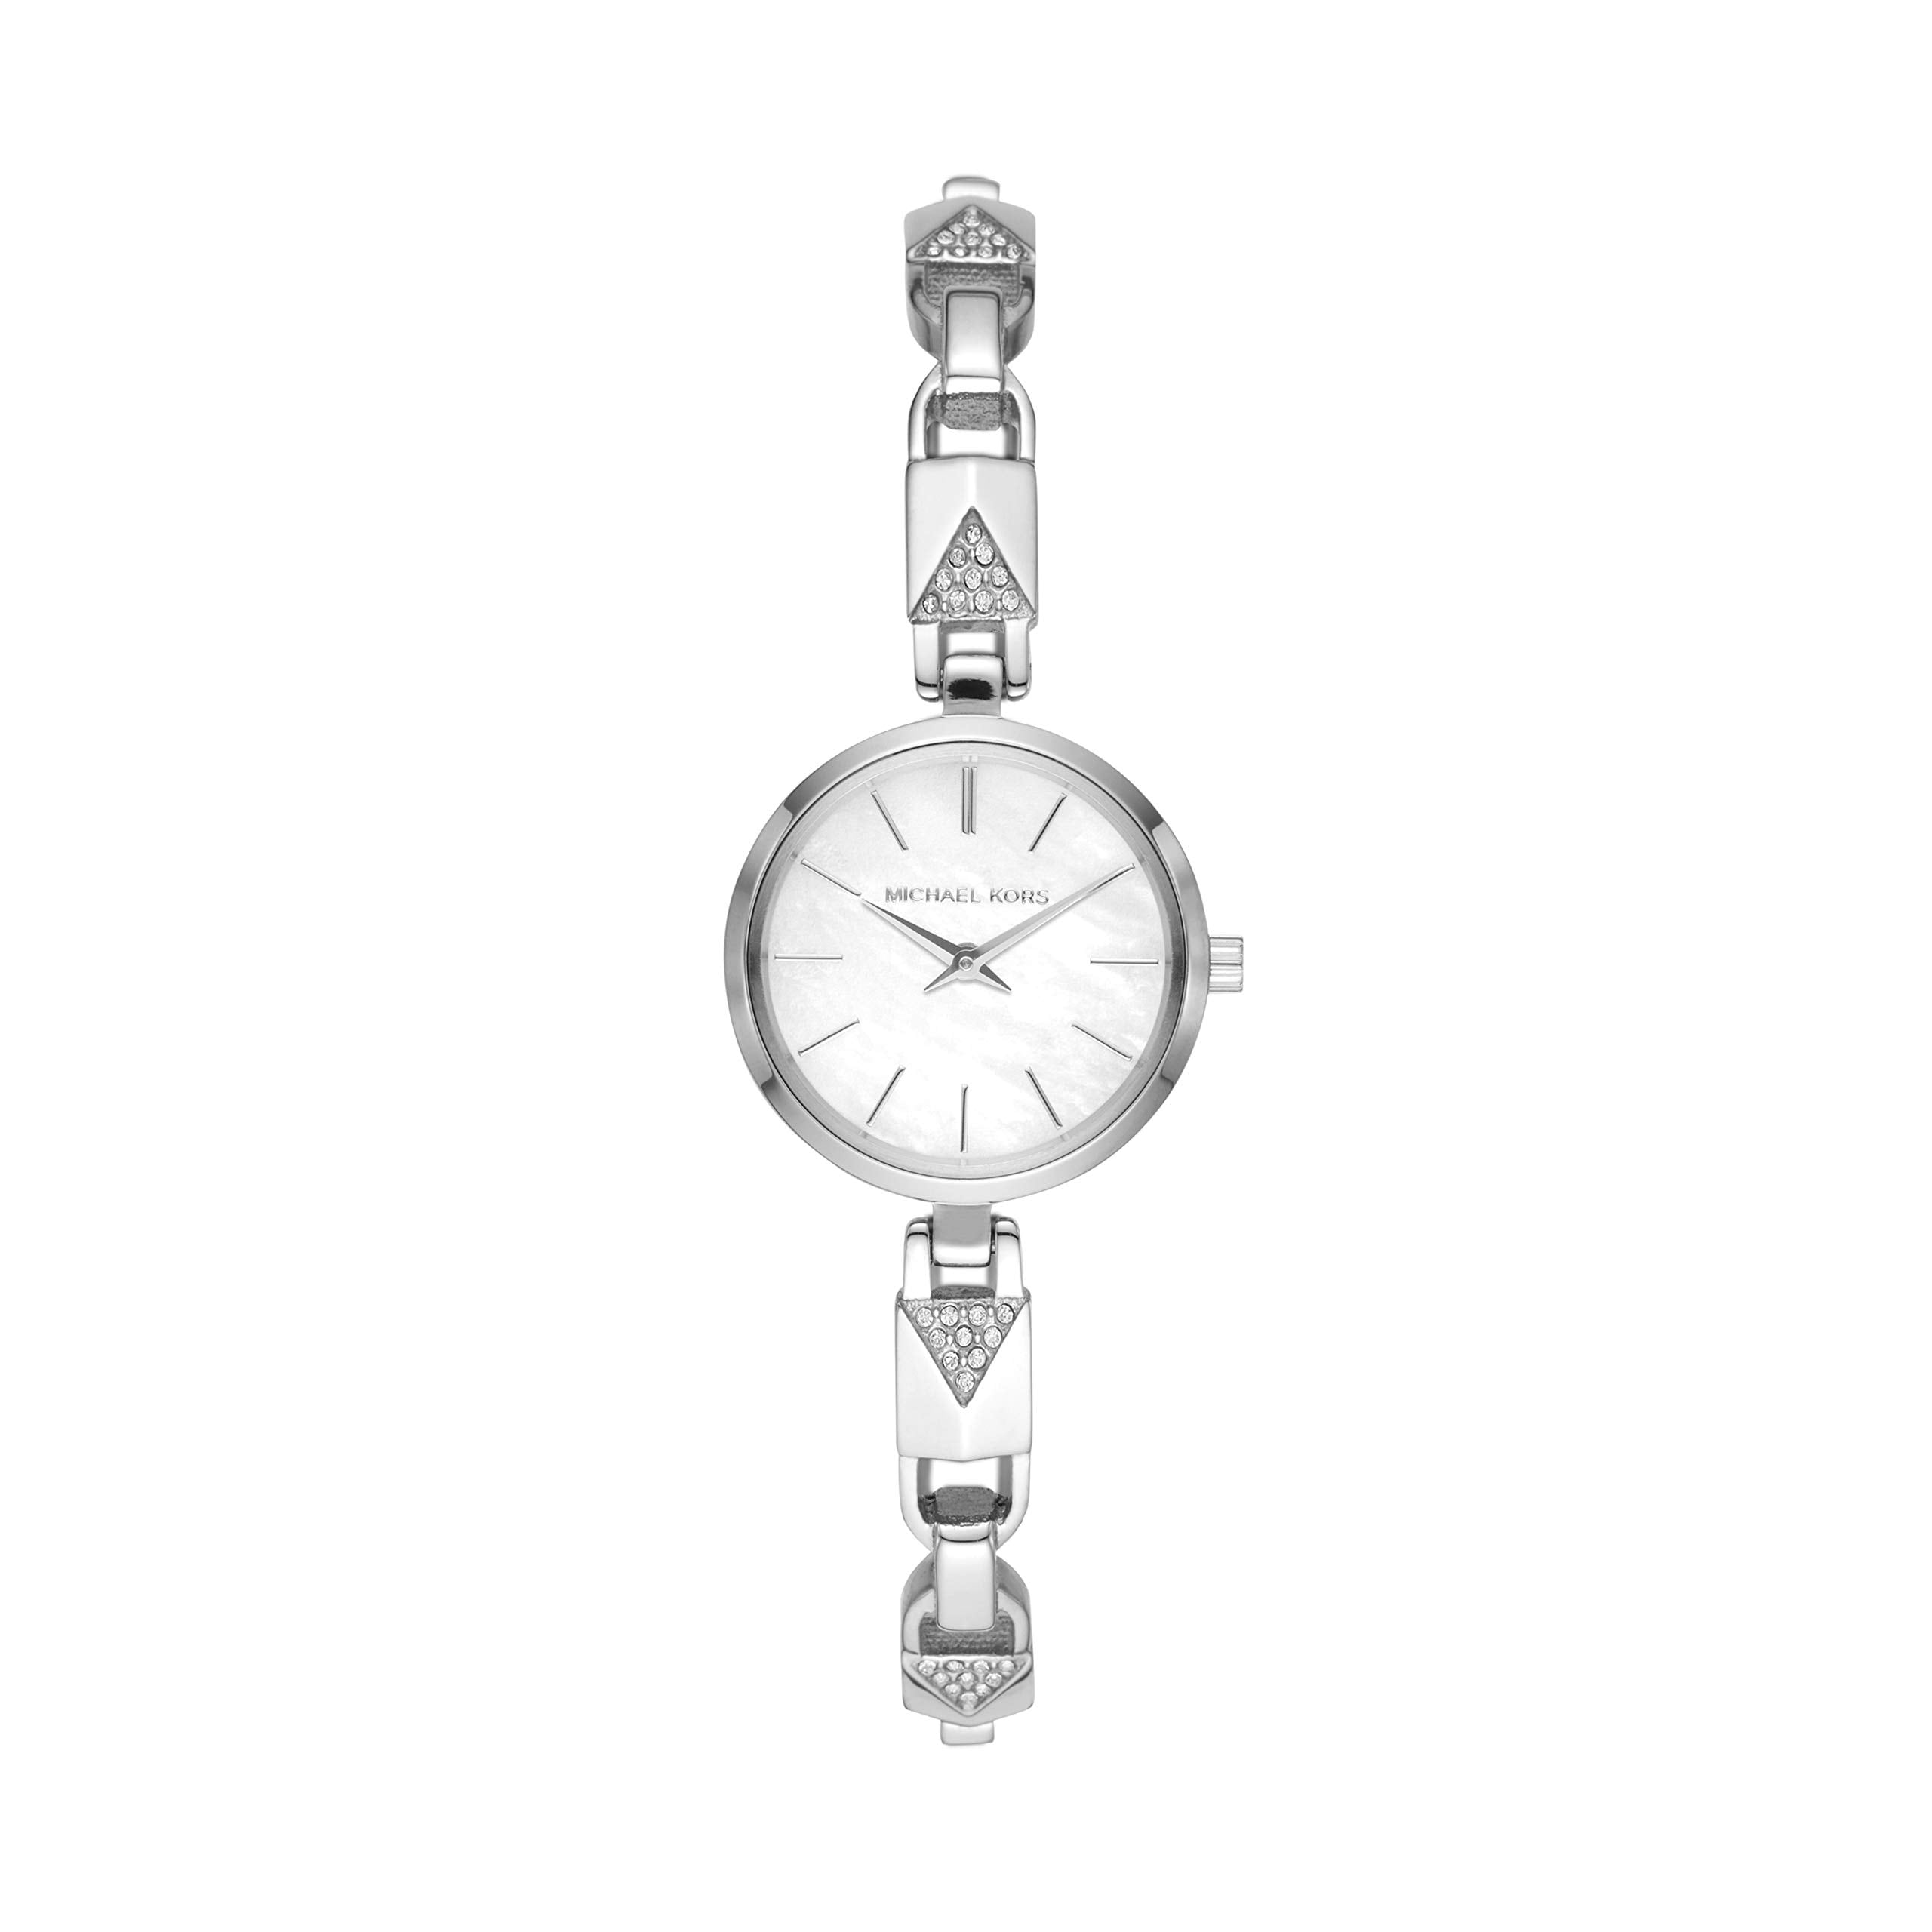 silver diamond michael kors watch